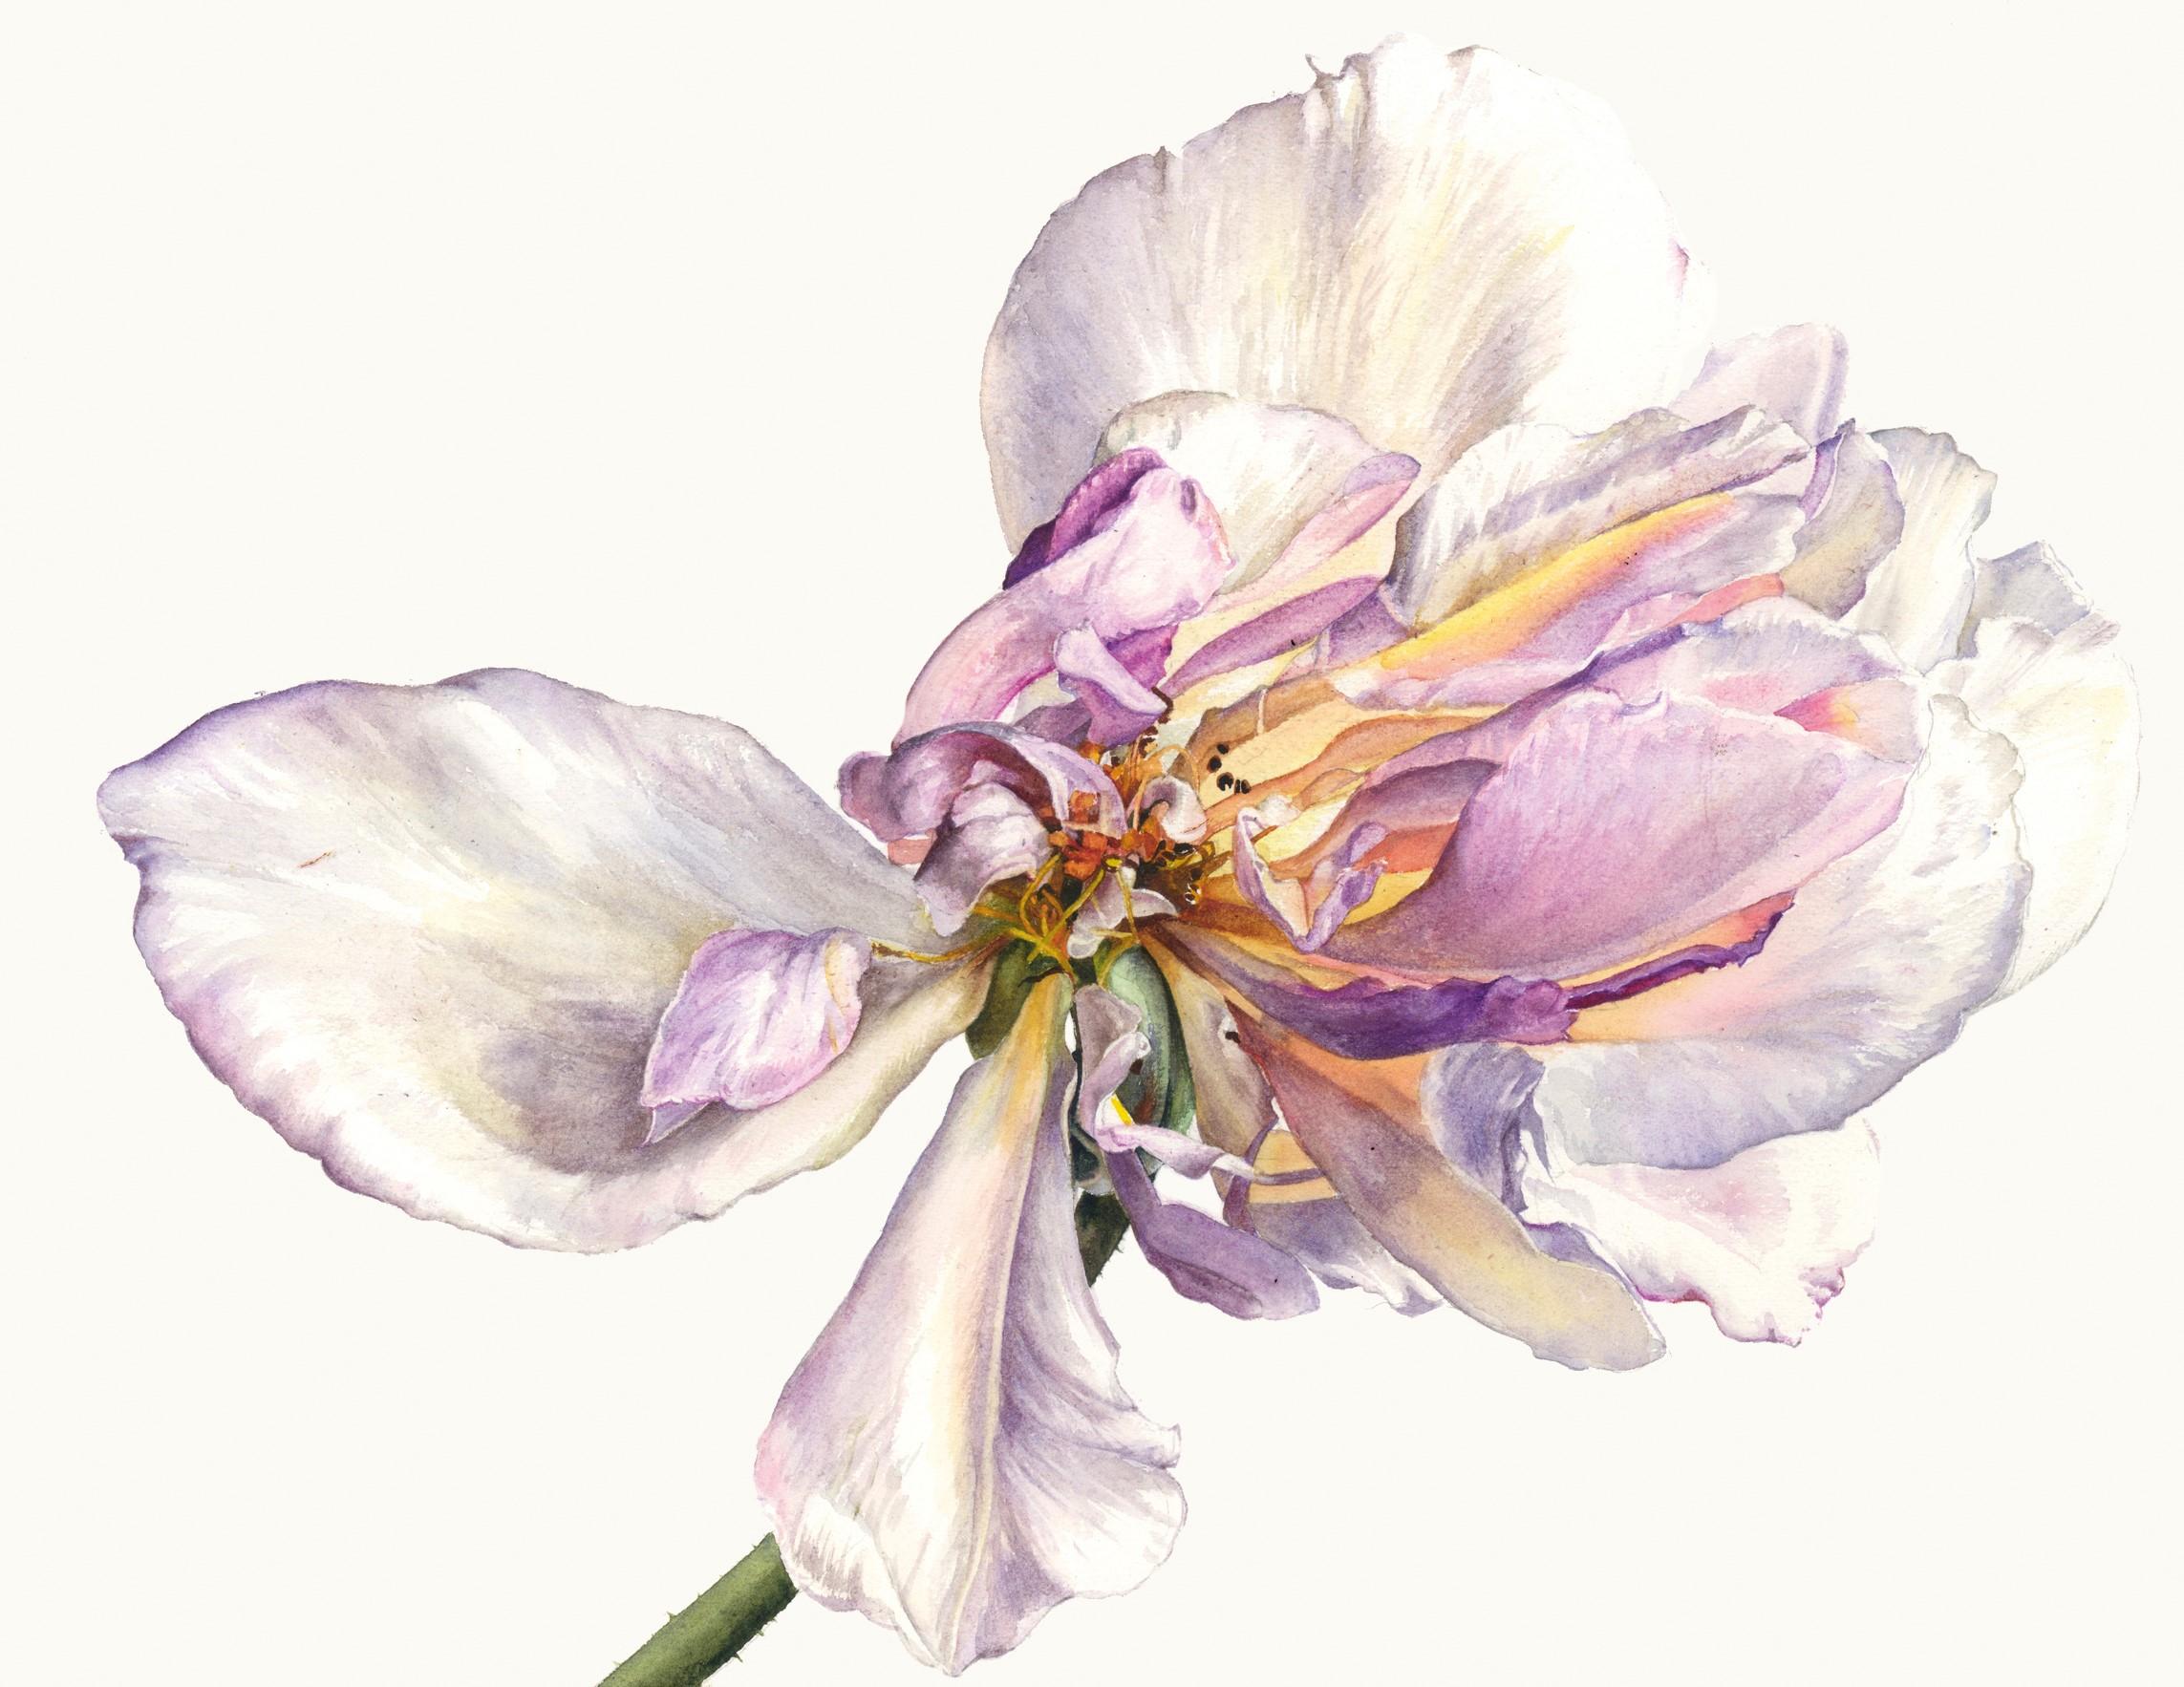 Rosie Sanders Figurative Painting - Morning light - 21st Century, Contemporary, watercolour, botanical art